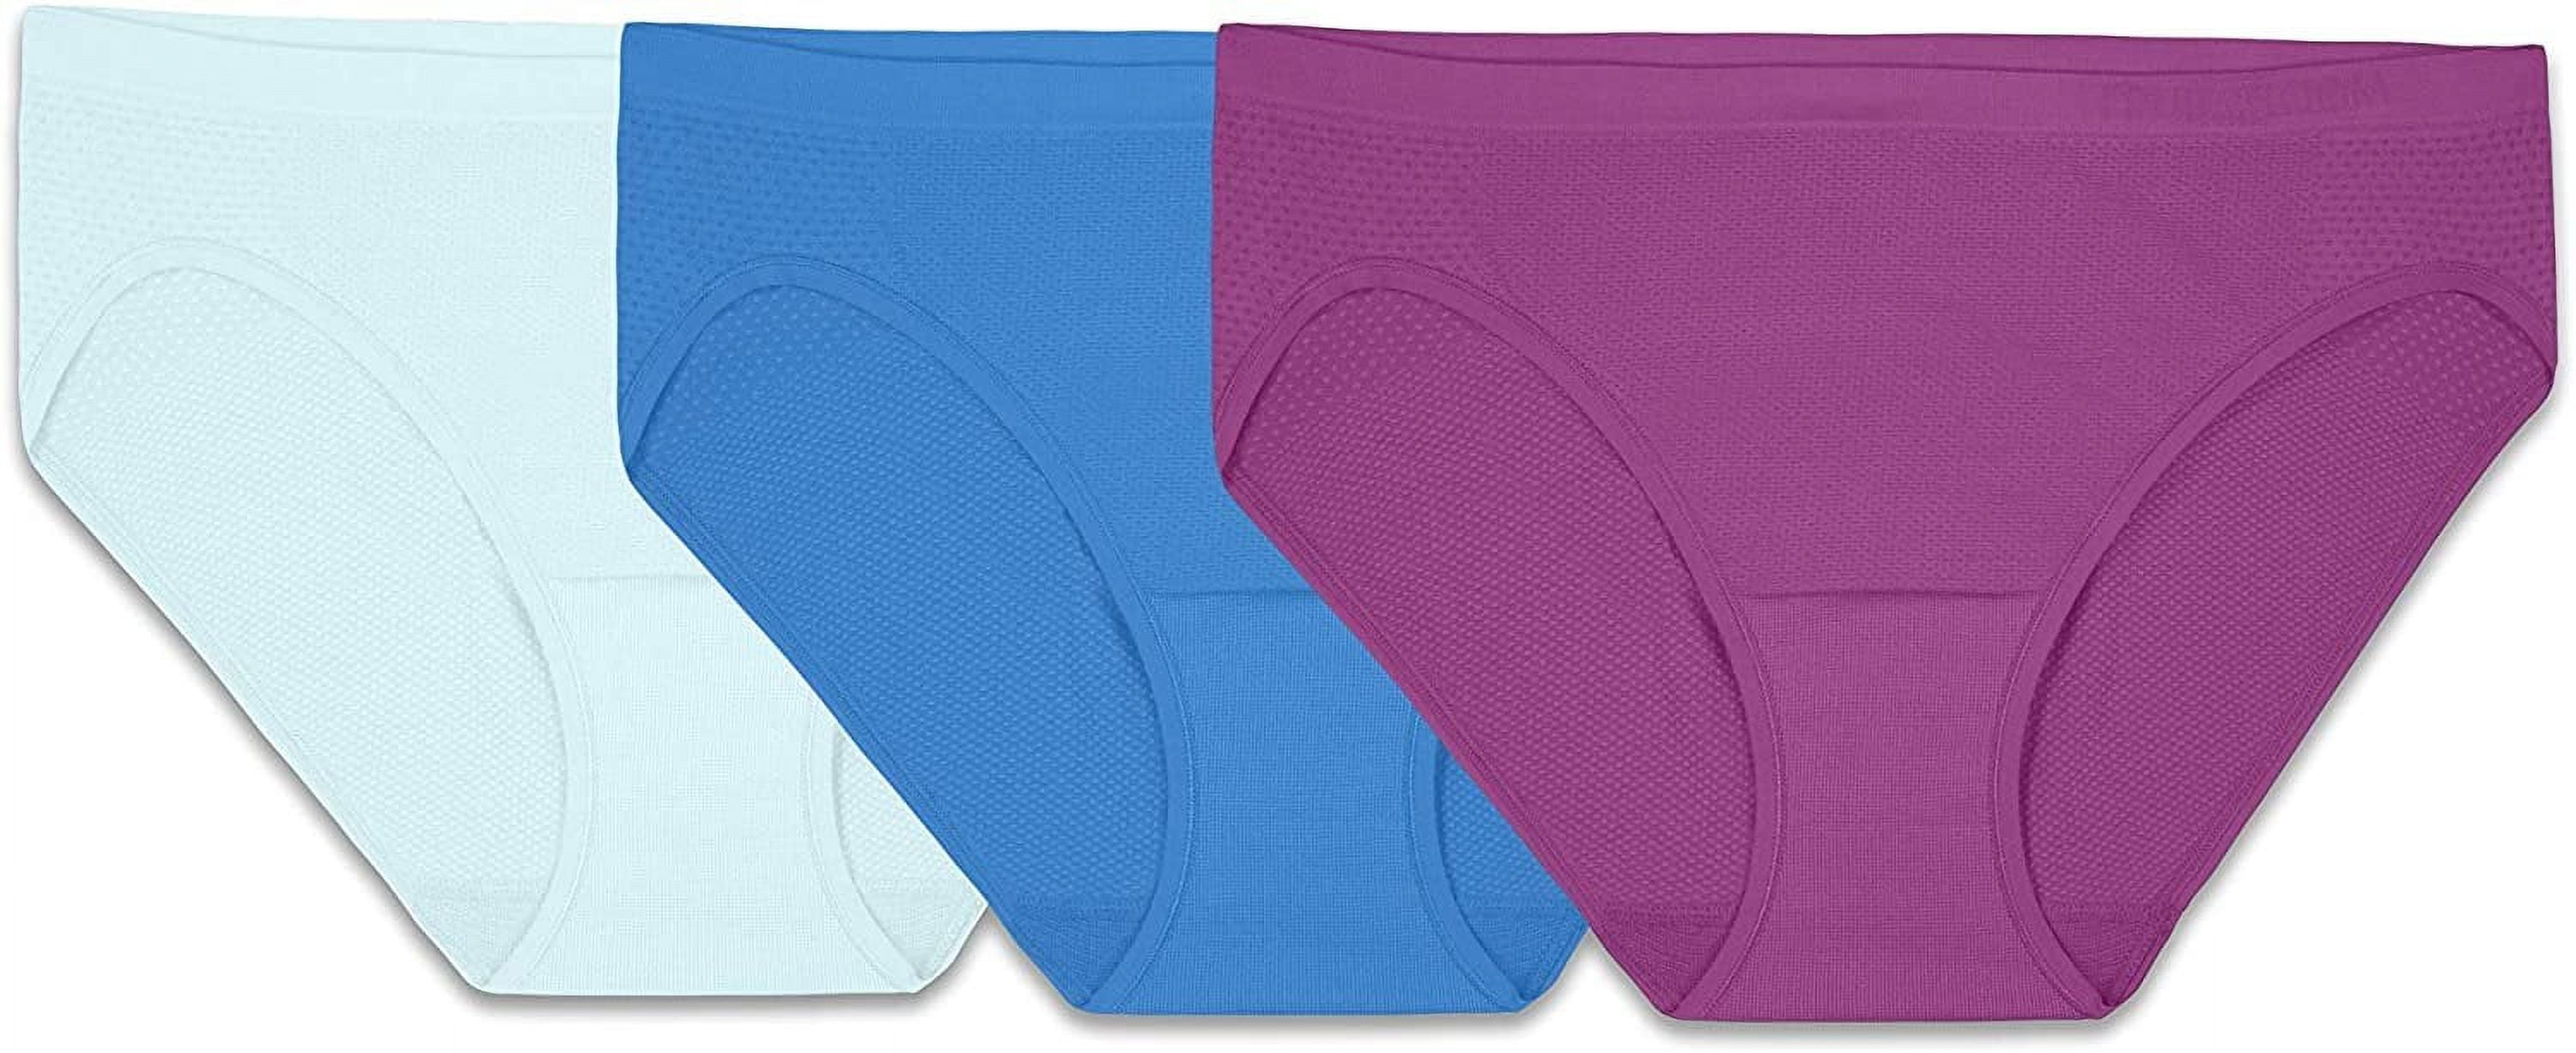 Fruit of the Loom Women's Breathable Underwear (Regular & Plus Size) Briefs